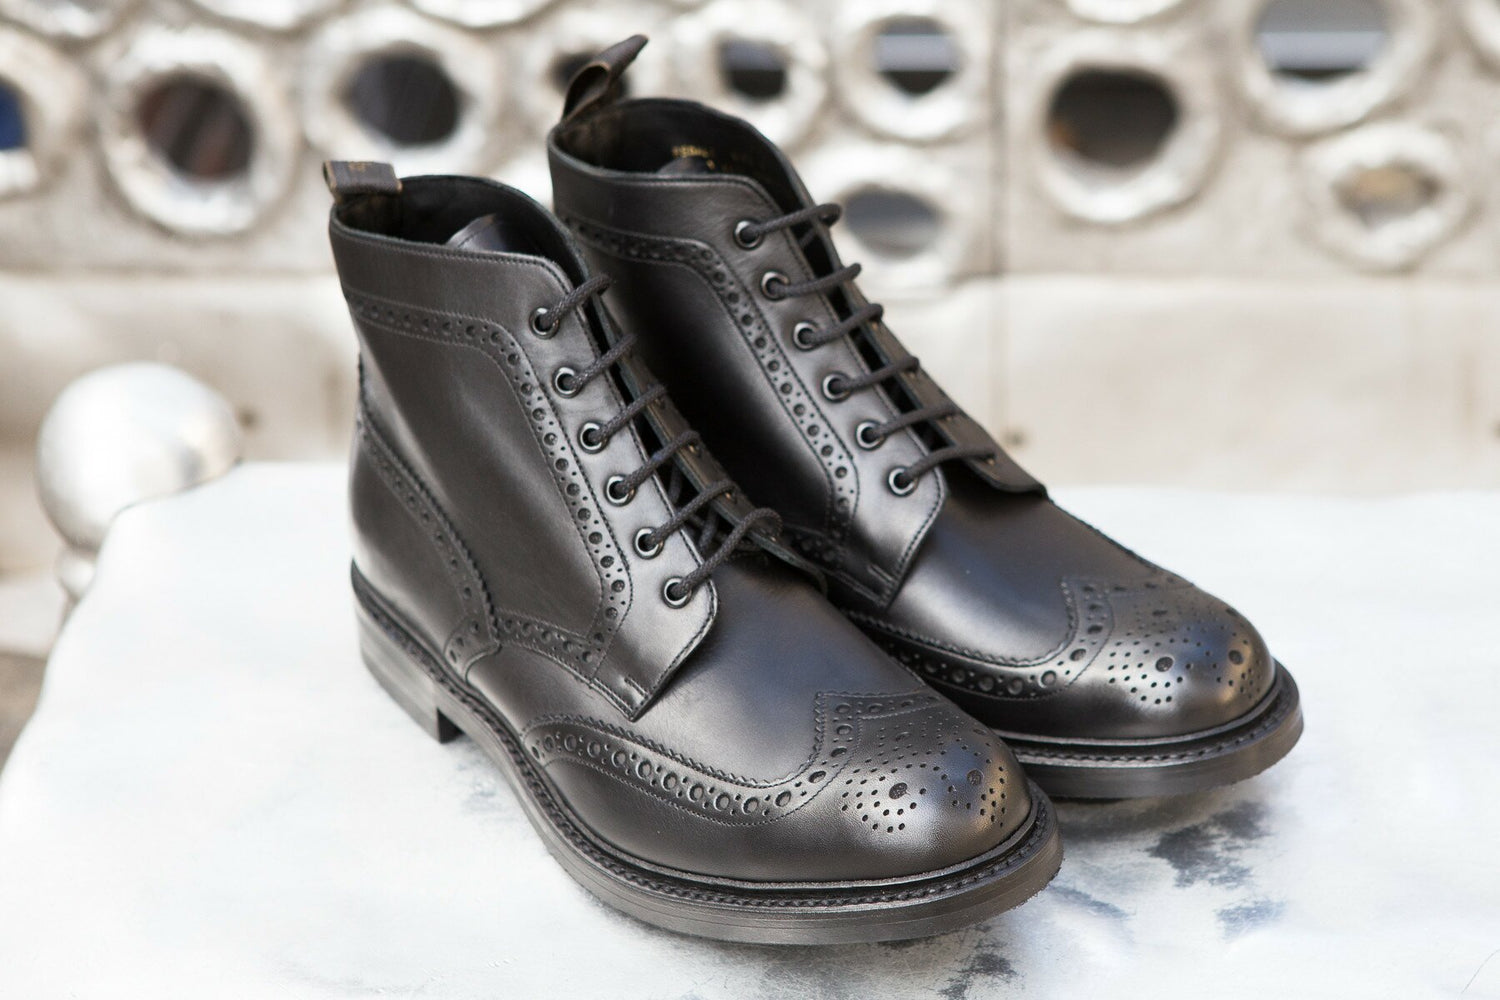 Loake - Boots en cuir noir semelle cousue goodyear